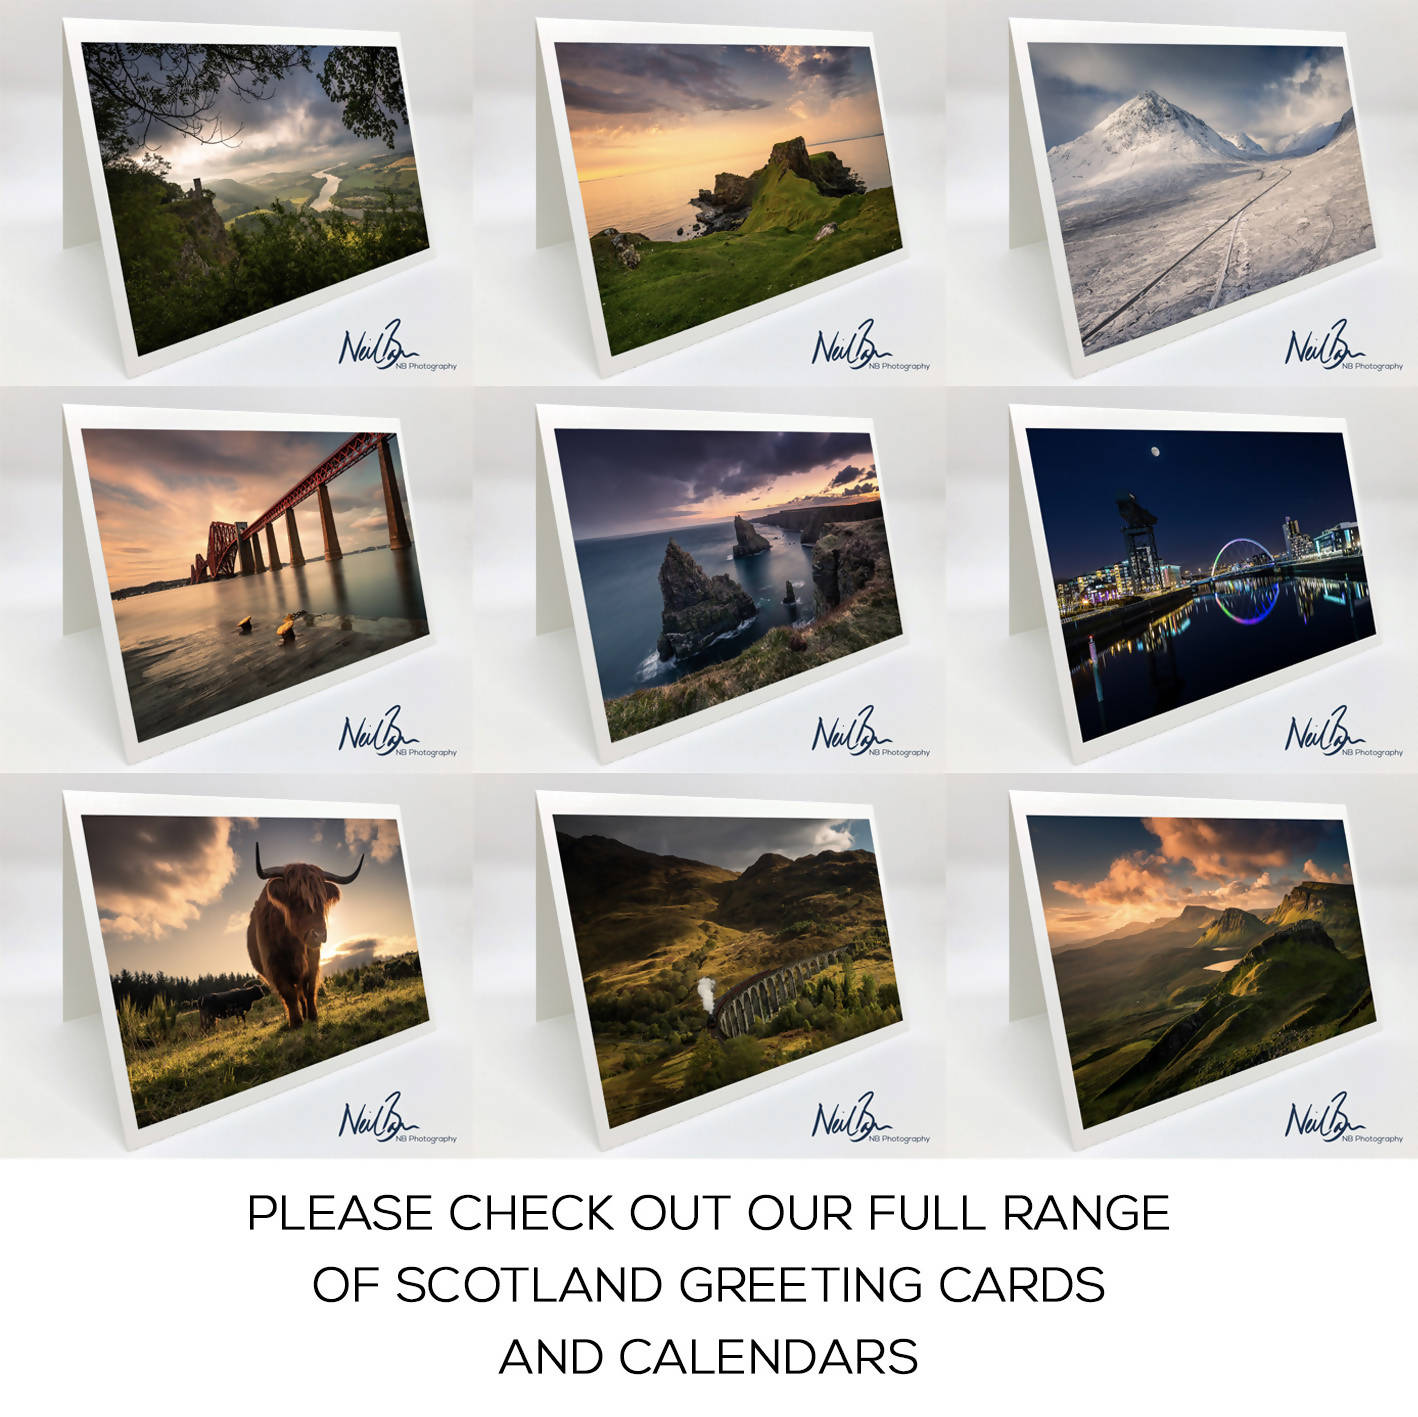 Rattray Head Lighthouse, Aberdeenshire - Scotland Greeting Card - Blank Inside